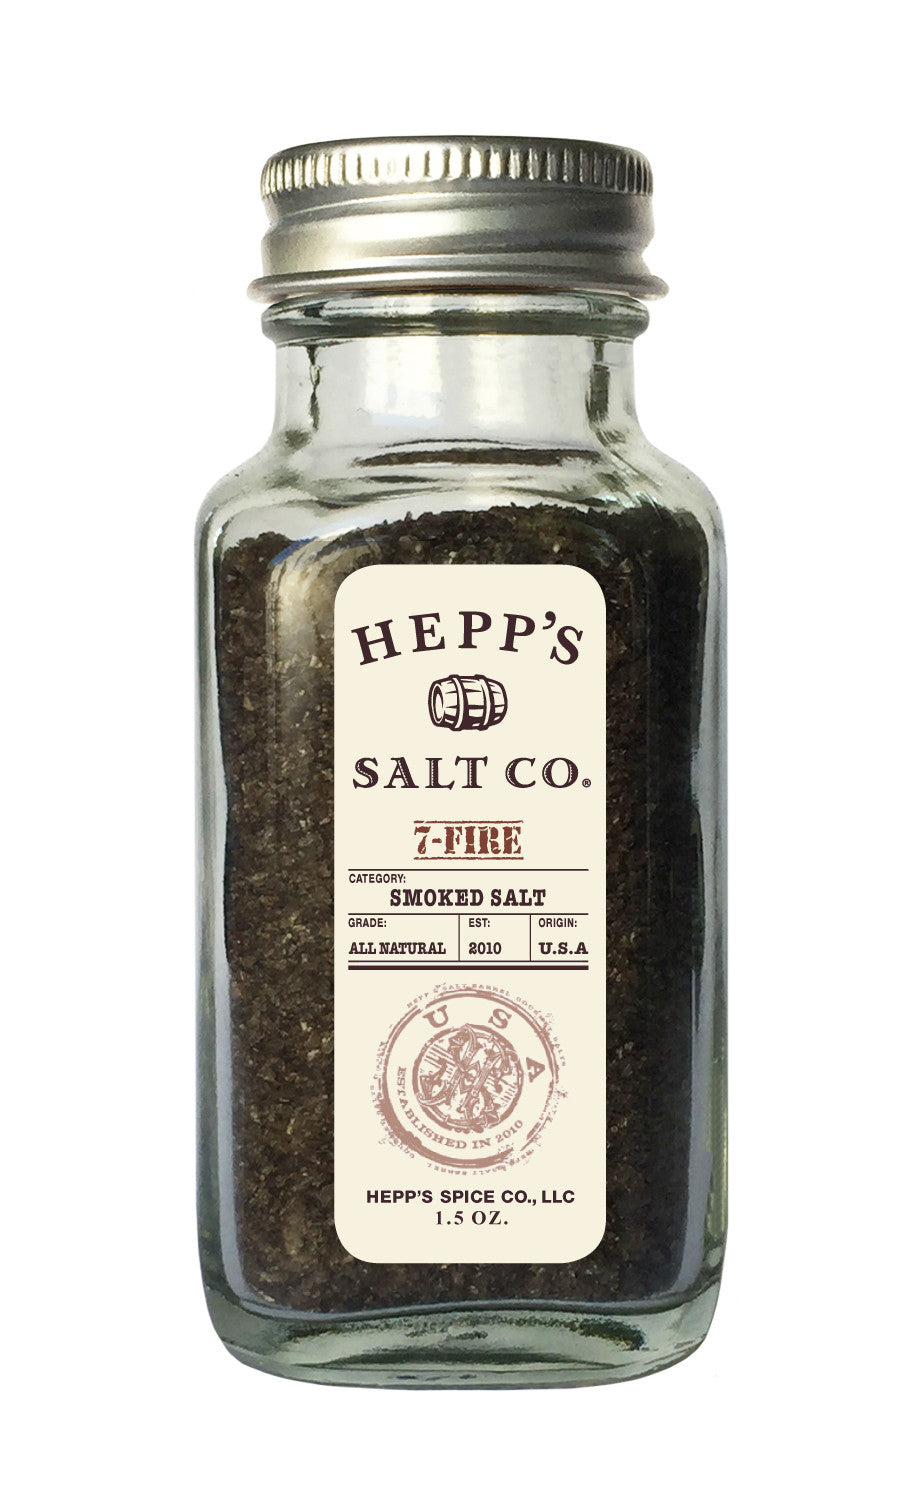 7- Fire Smoked Sea Salt - HEPPS SALT CO. 